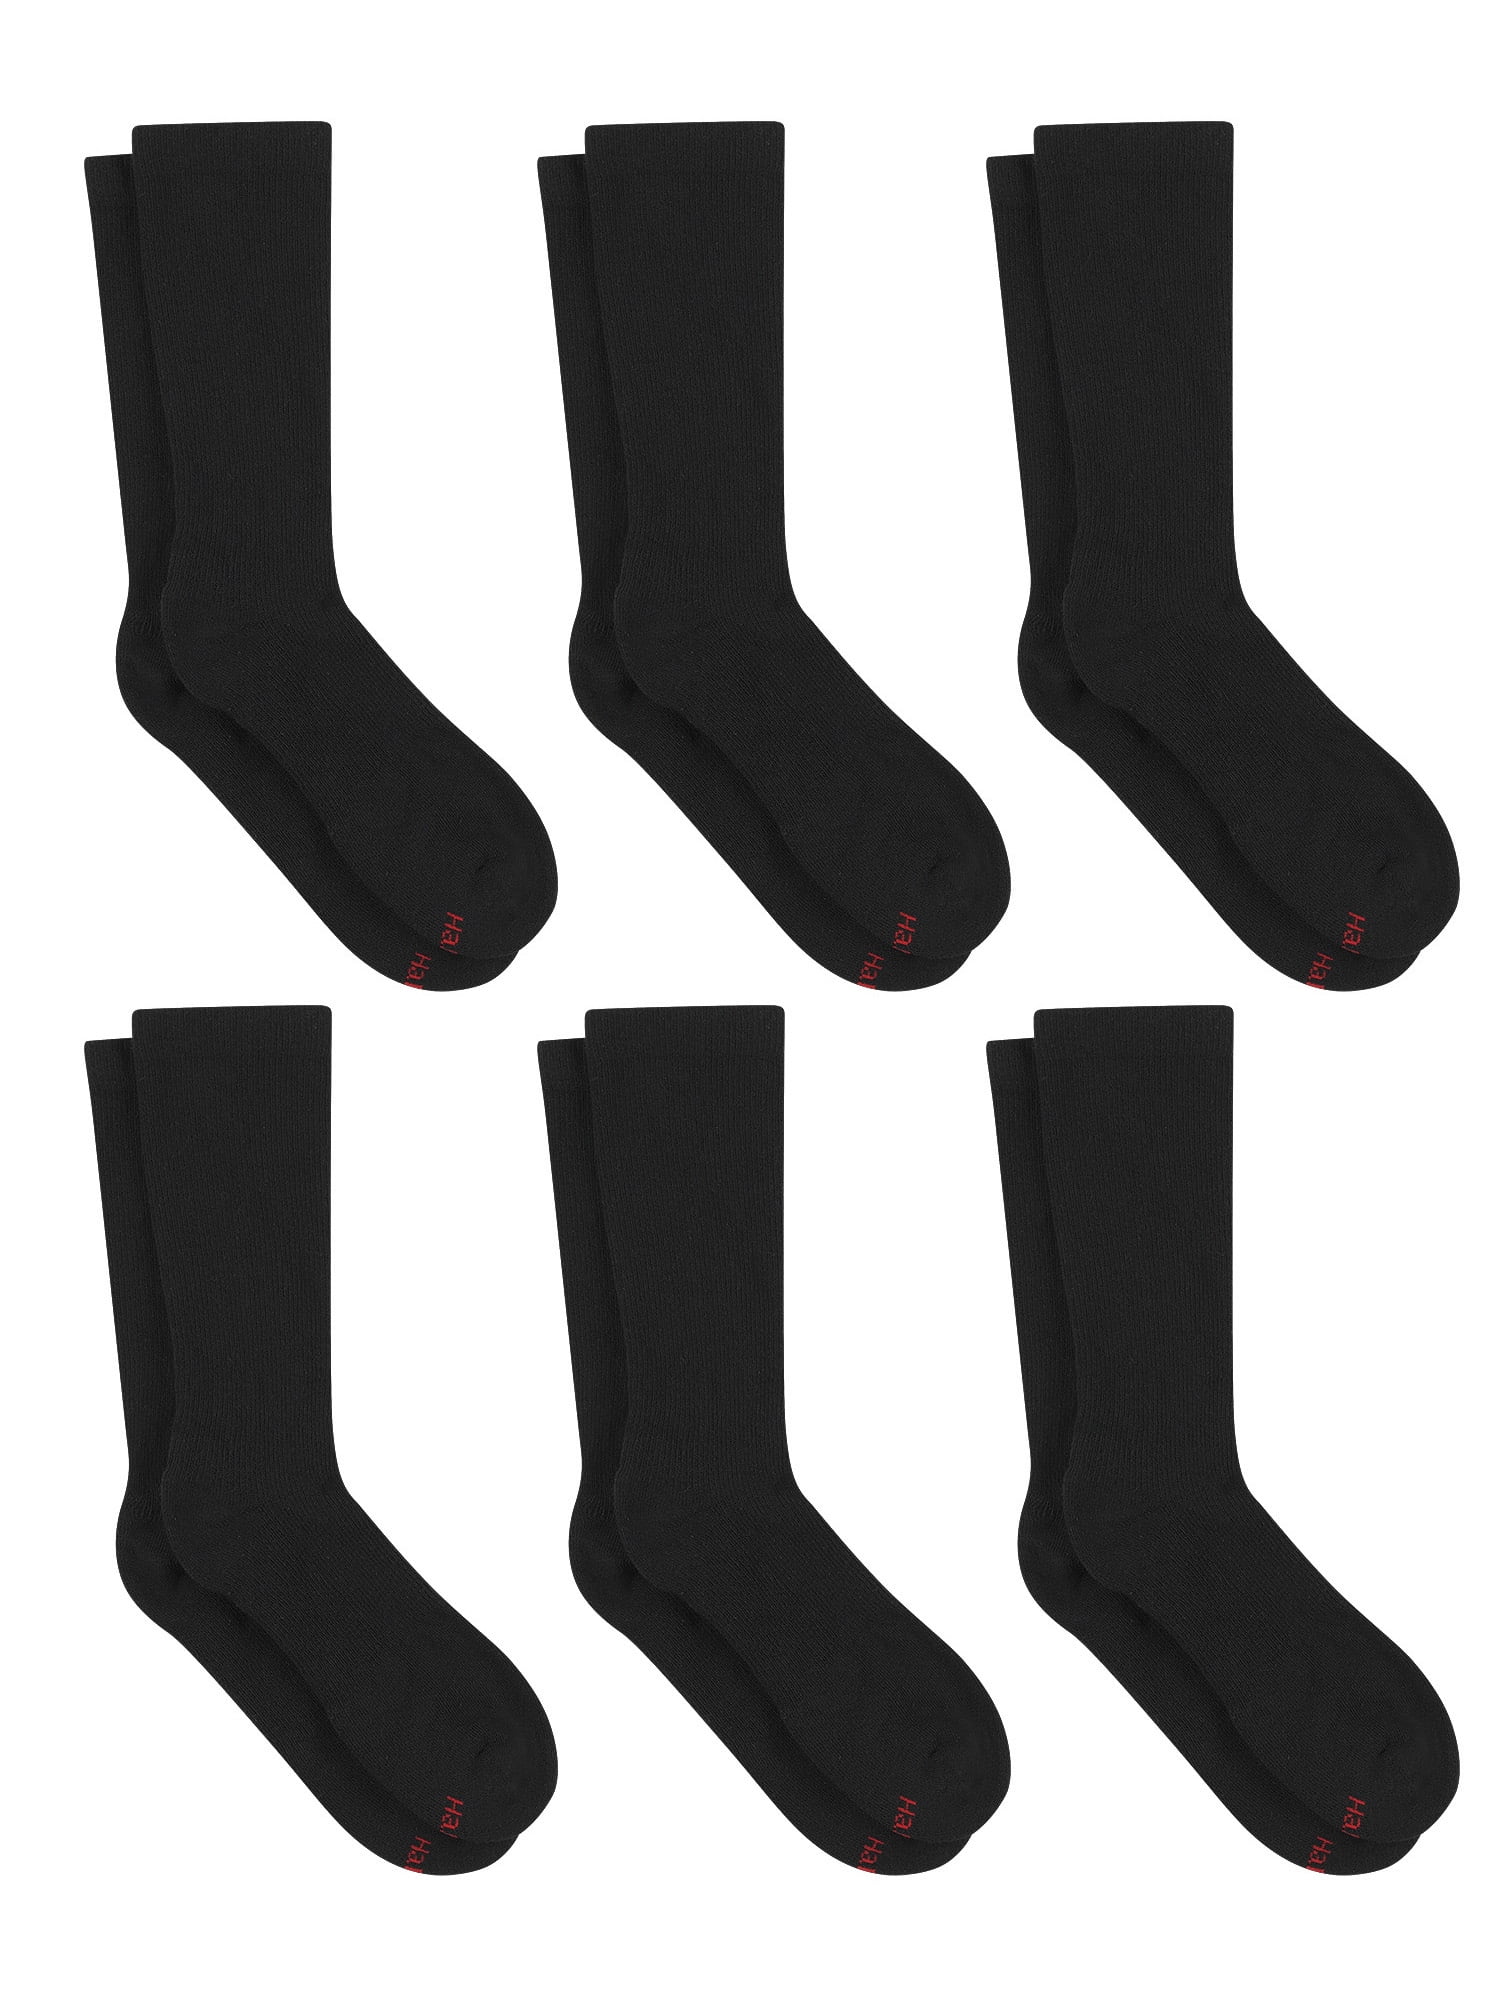 Hanes Men's Crew Socks, Compression, 6-Pack 